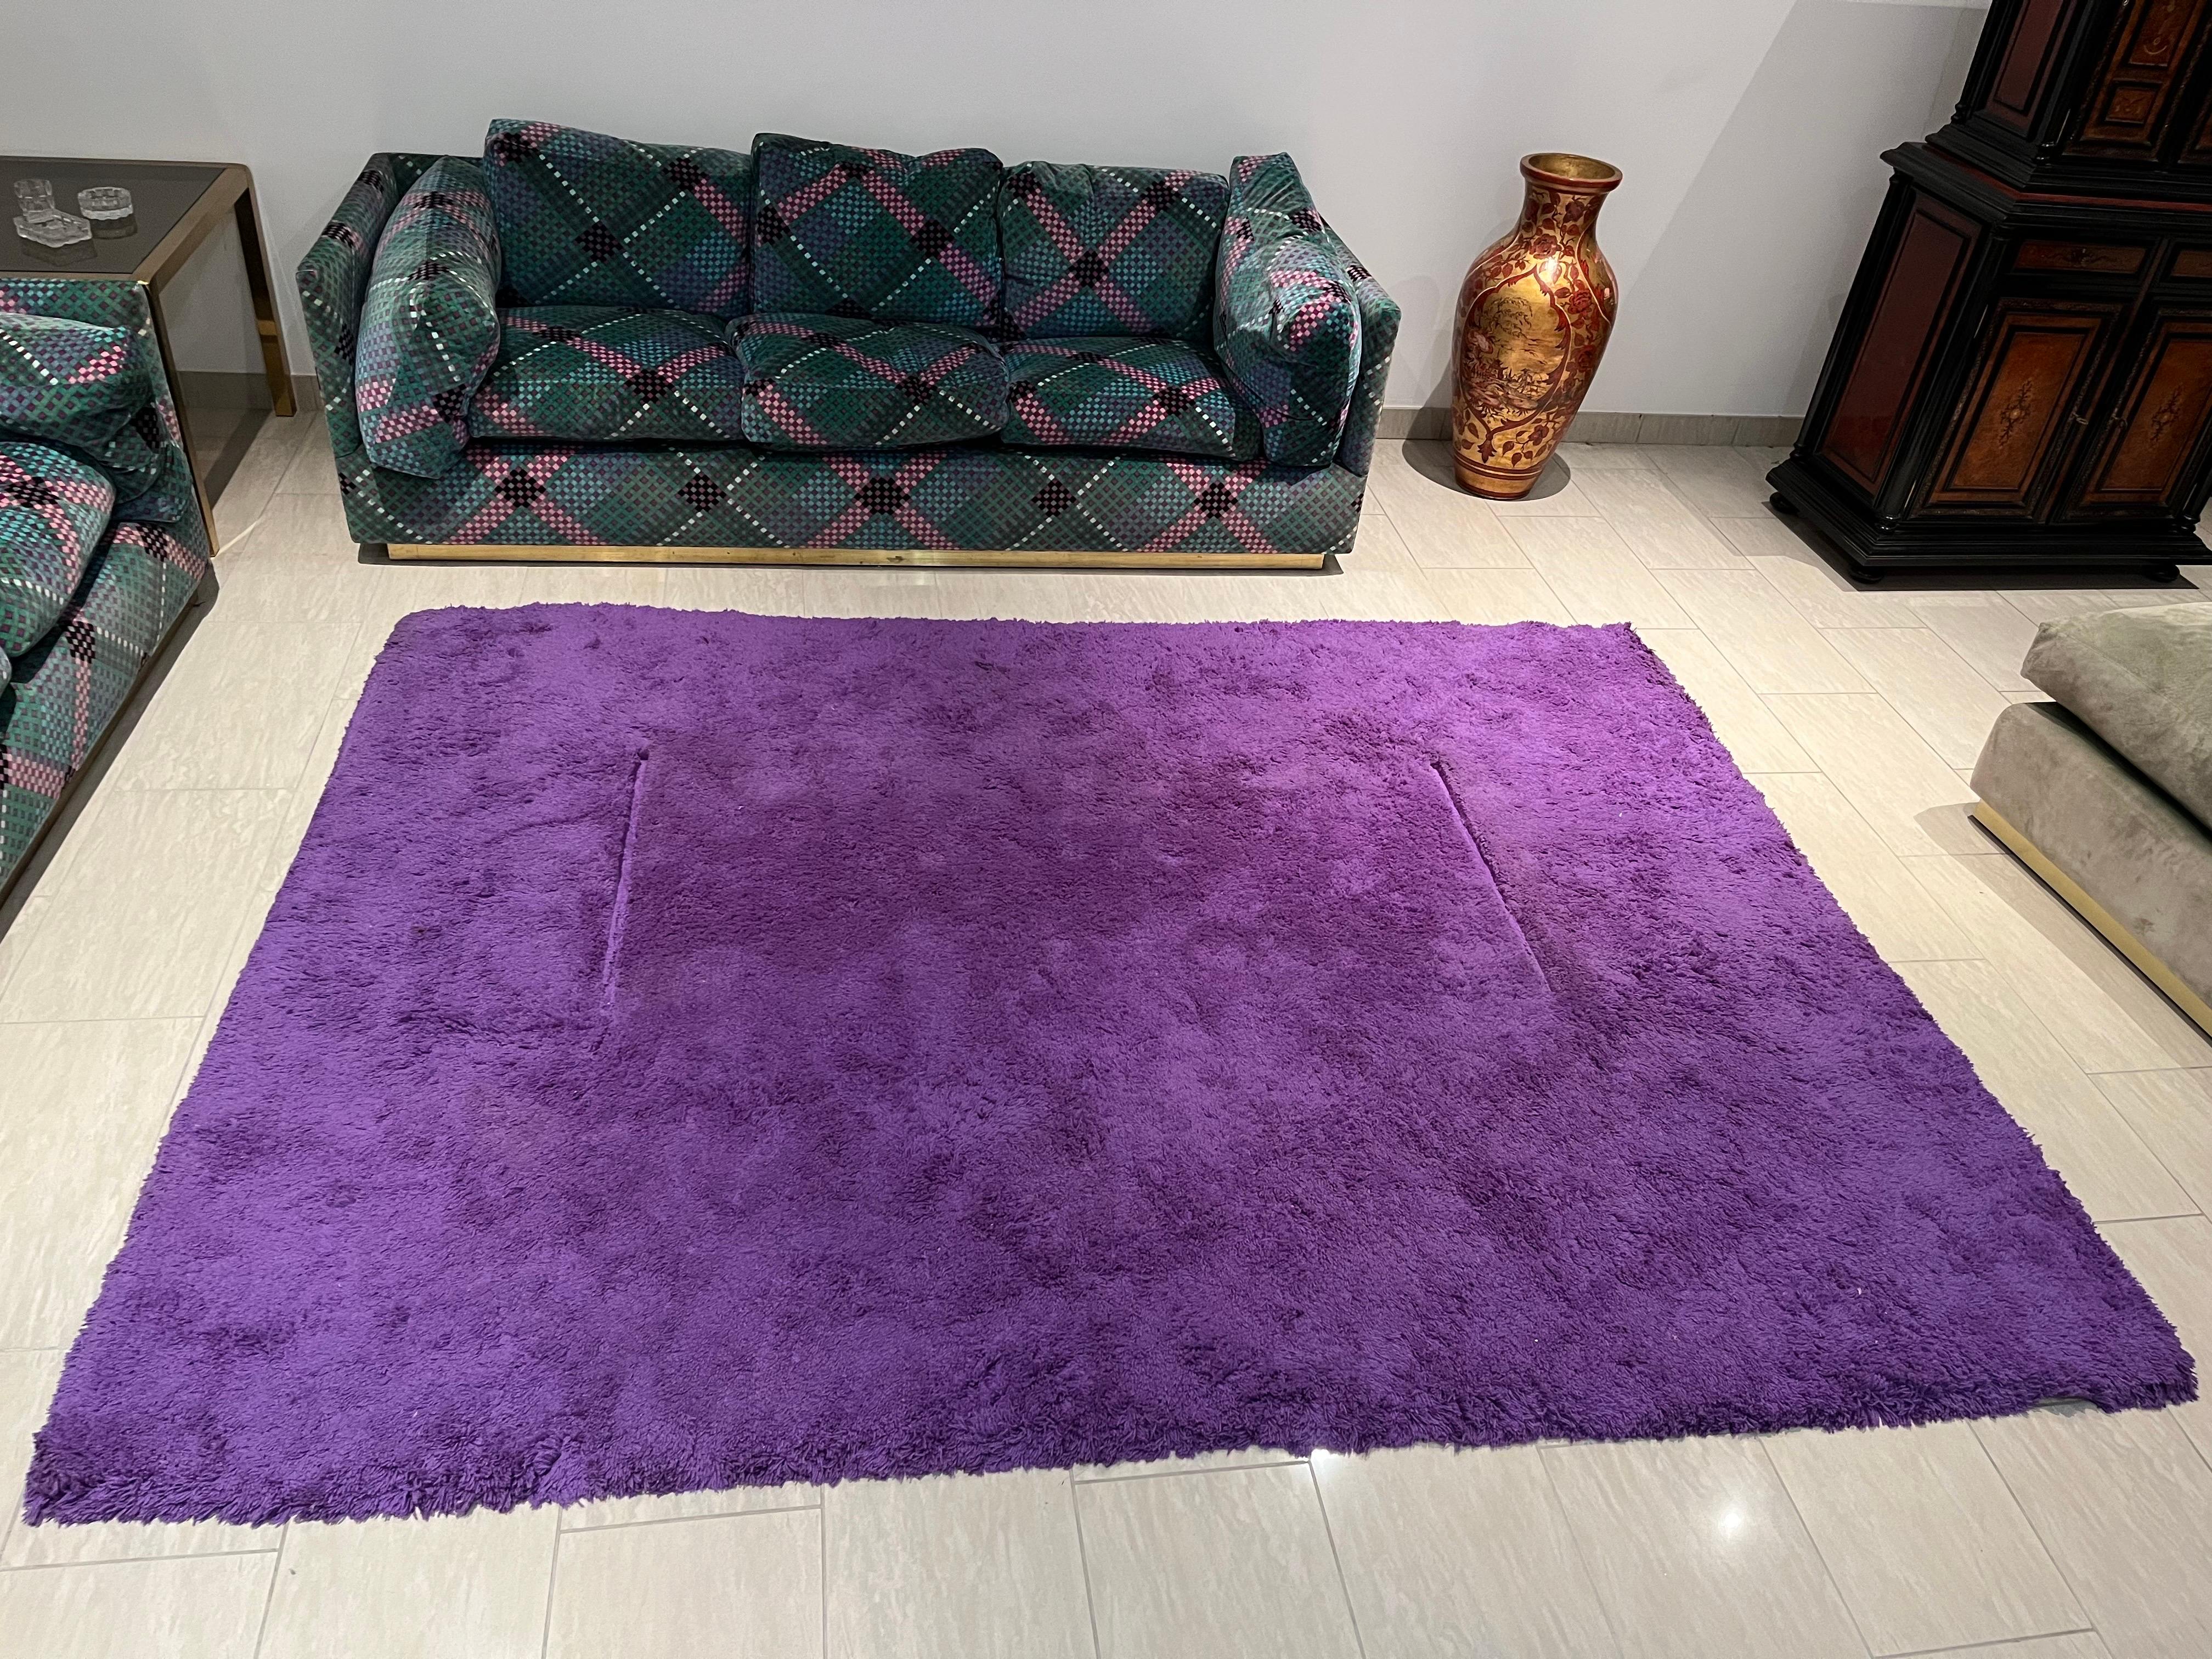 Purple Wool Carpet Design Tisca Original Handmade 1970s

Very good condition 

Measures 
Cm 200 x cm 300